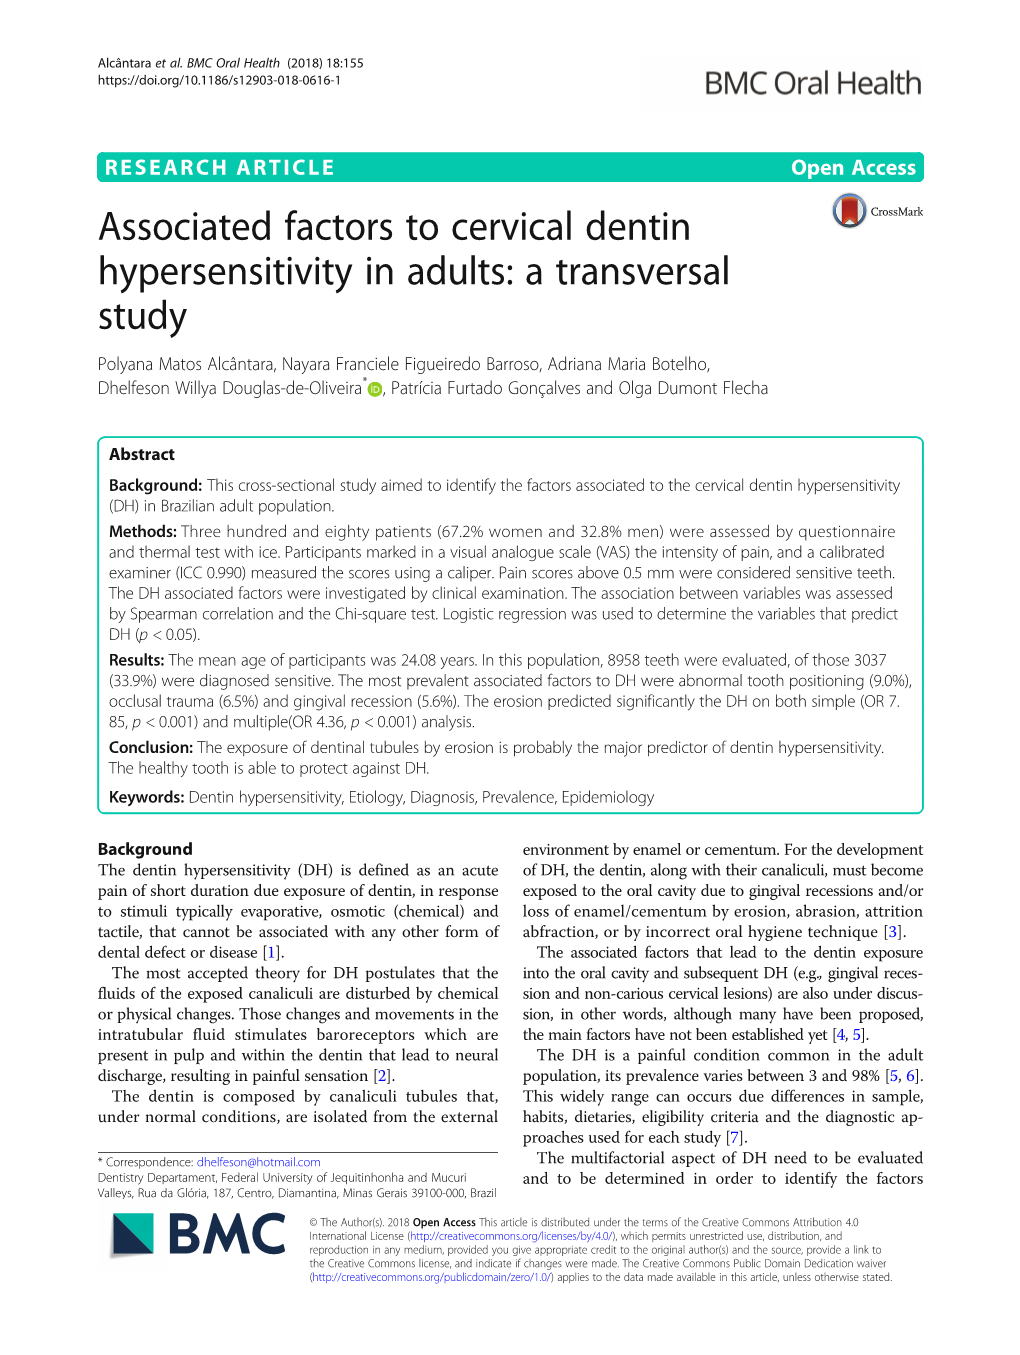 Associated Factors to Cervical Dentin Hypersensitivity